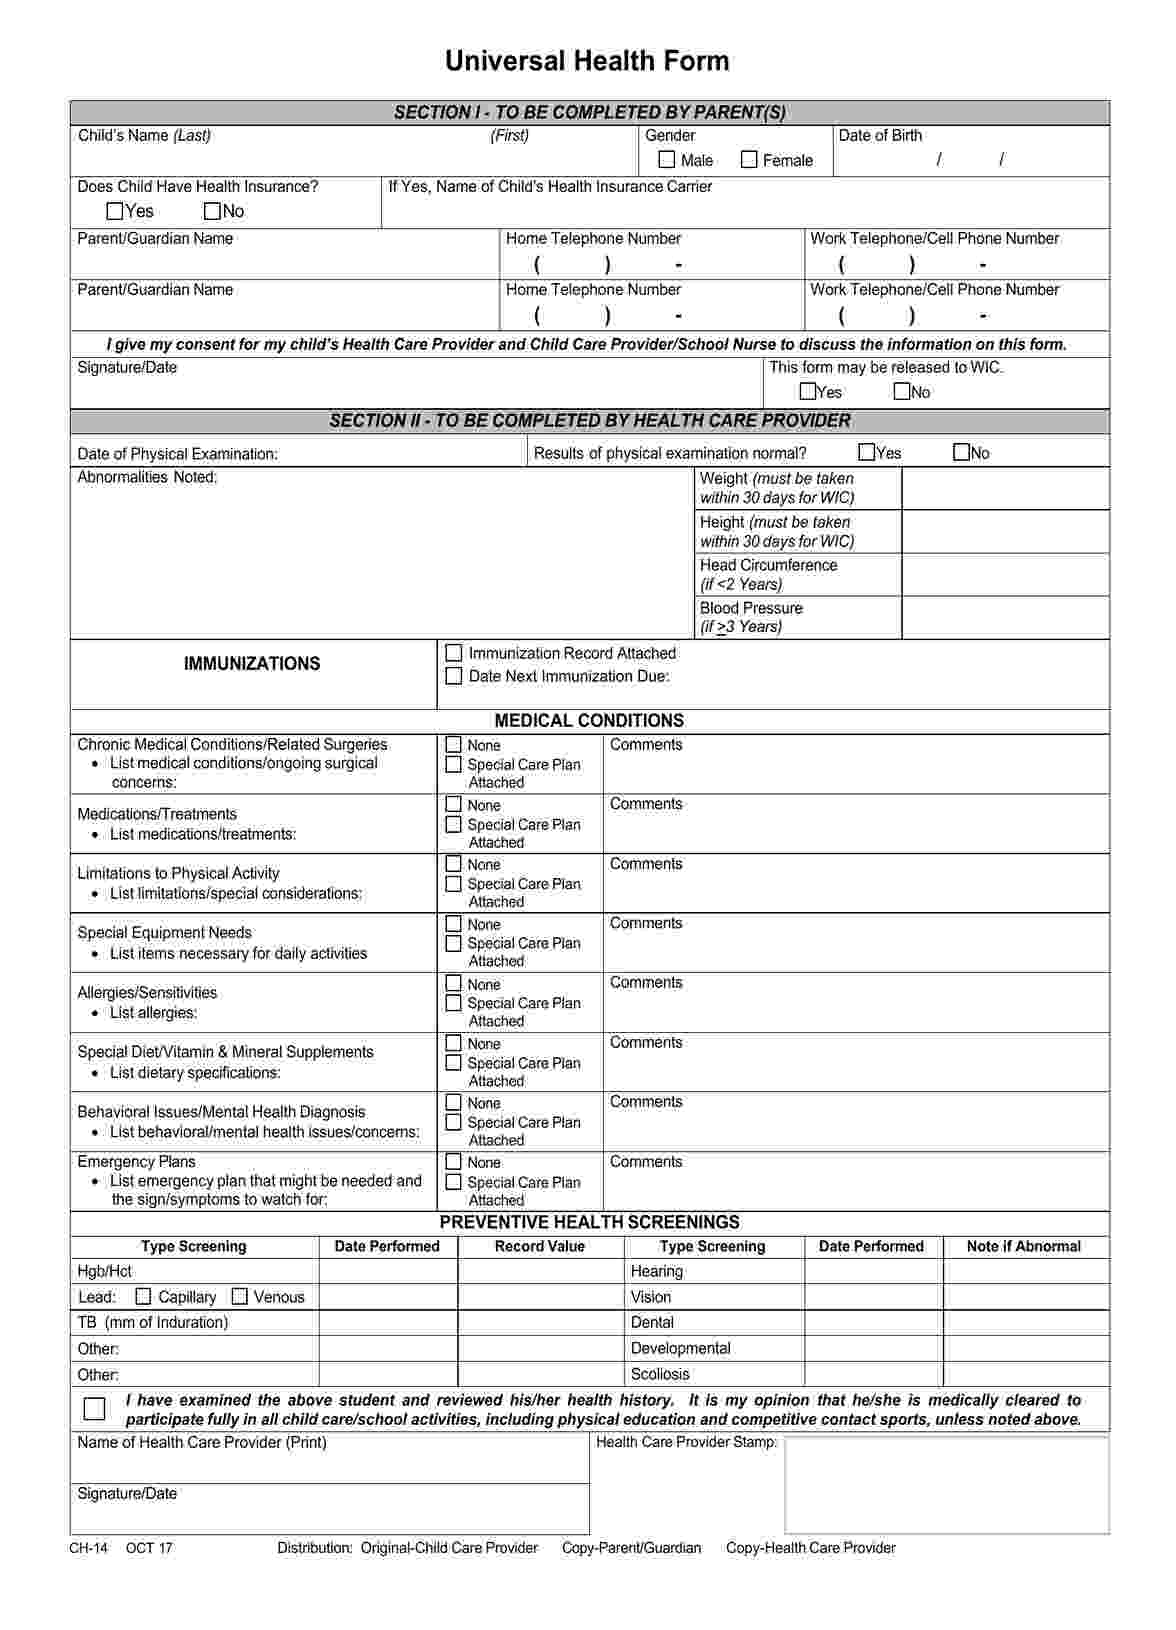 Universal Health Form PDF Example